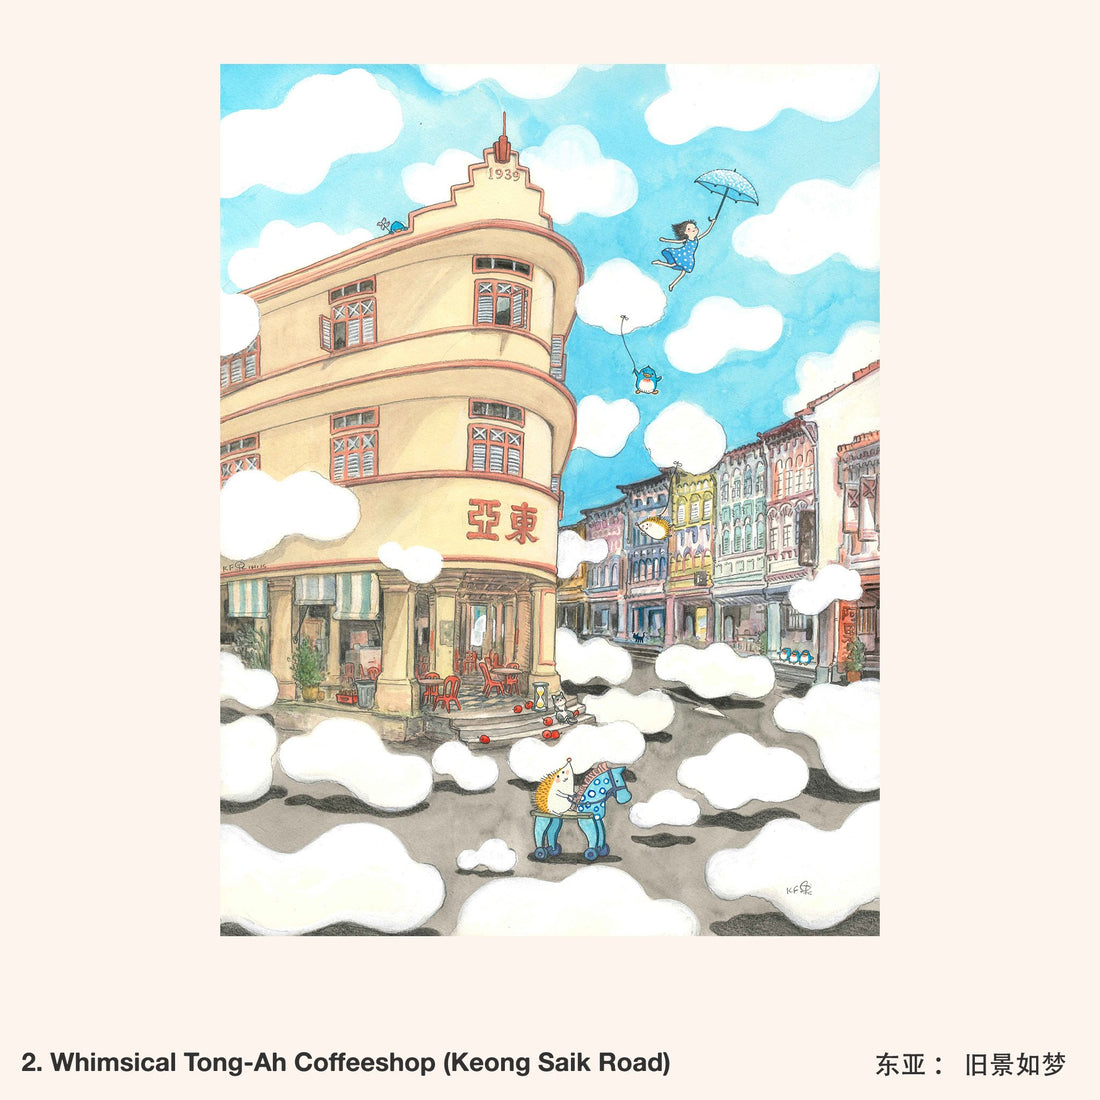 2. Whimsical Tong-Ah Coffeeshop (Keong Saik Road) Artwork